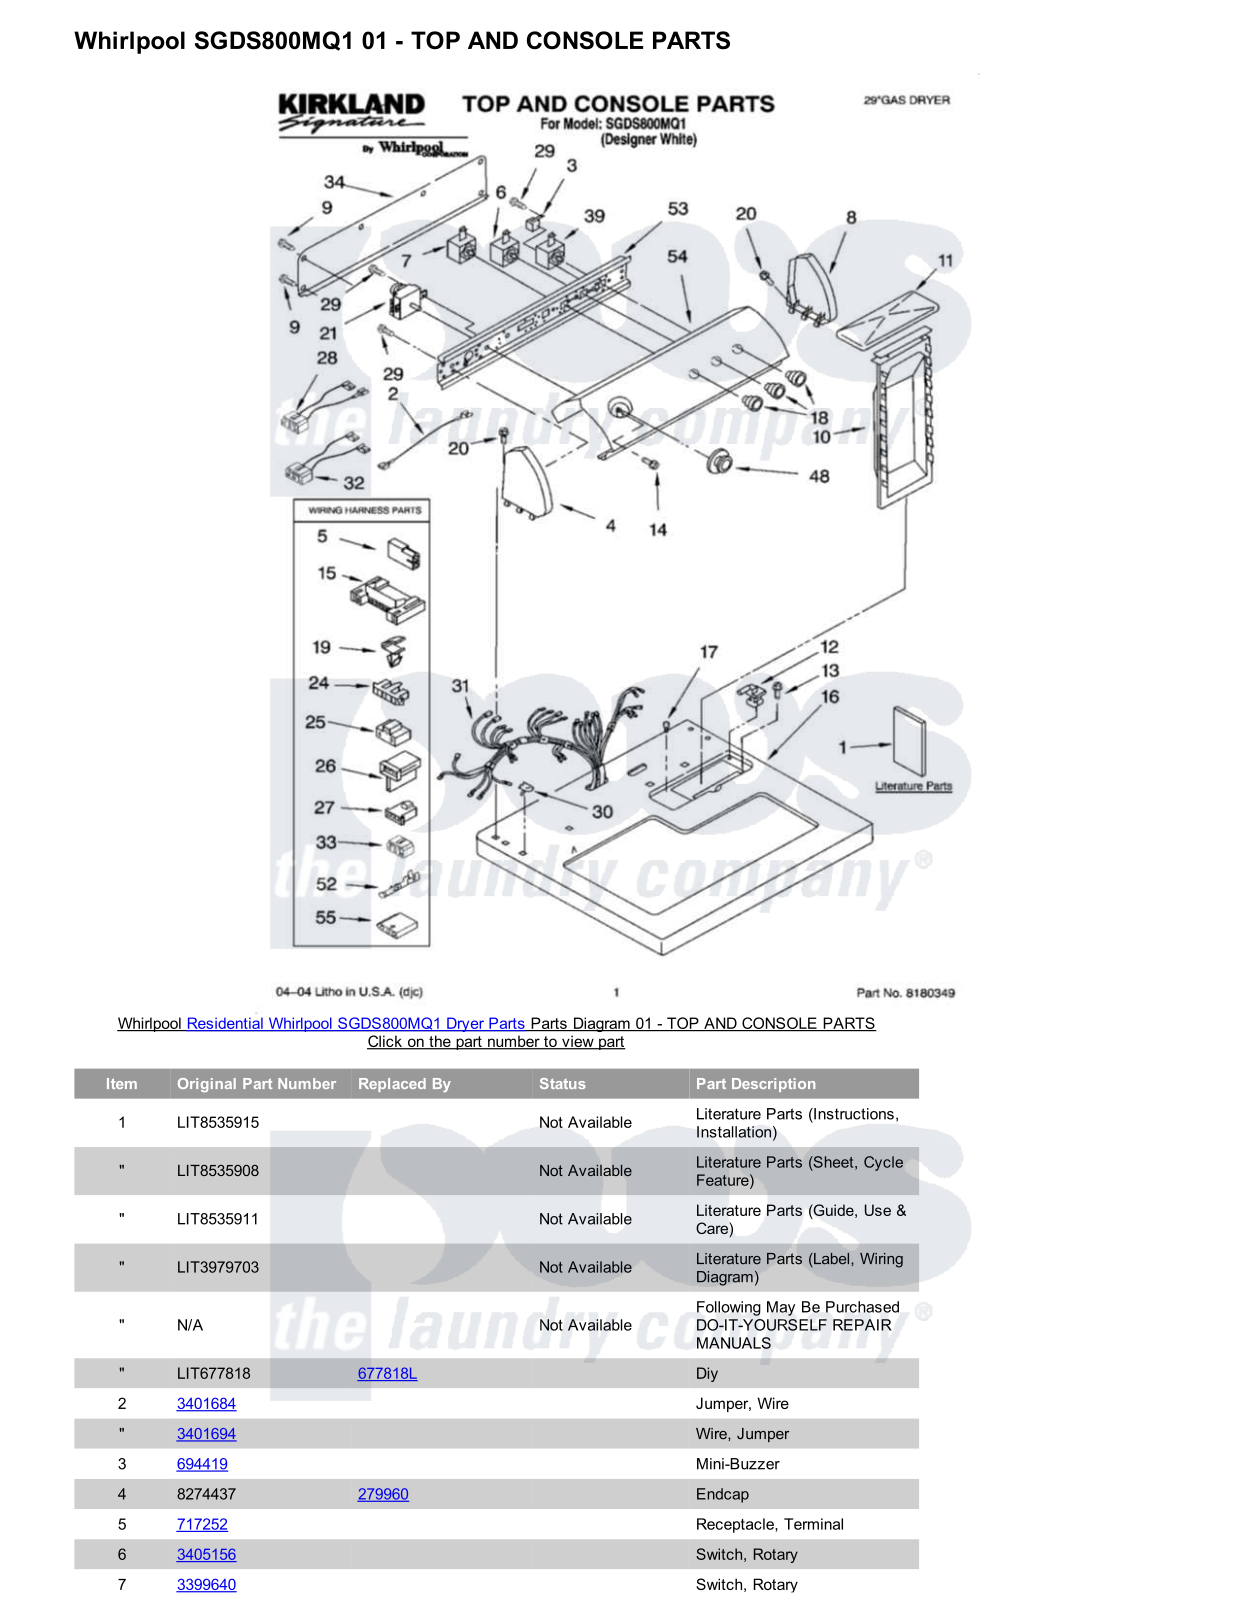 Whirlpool SGDS800MQ1 Parts Diagram